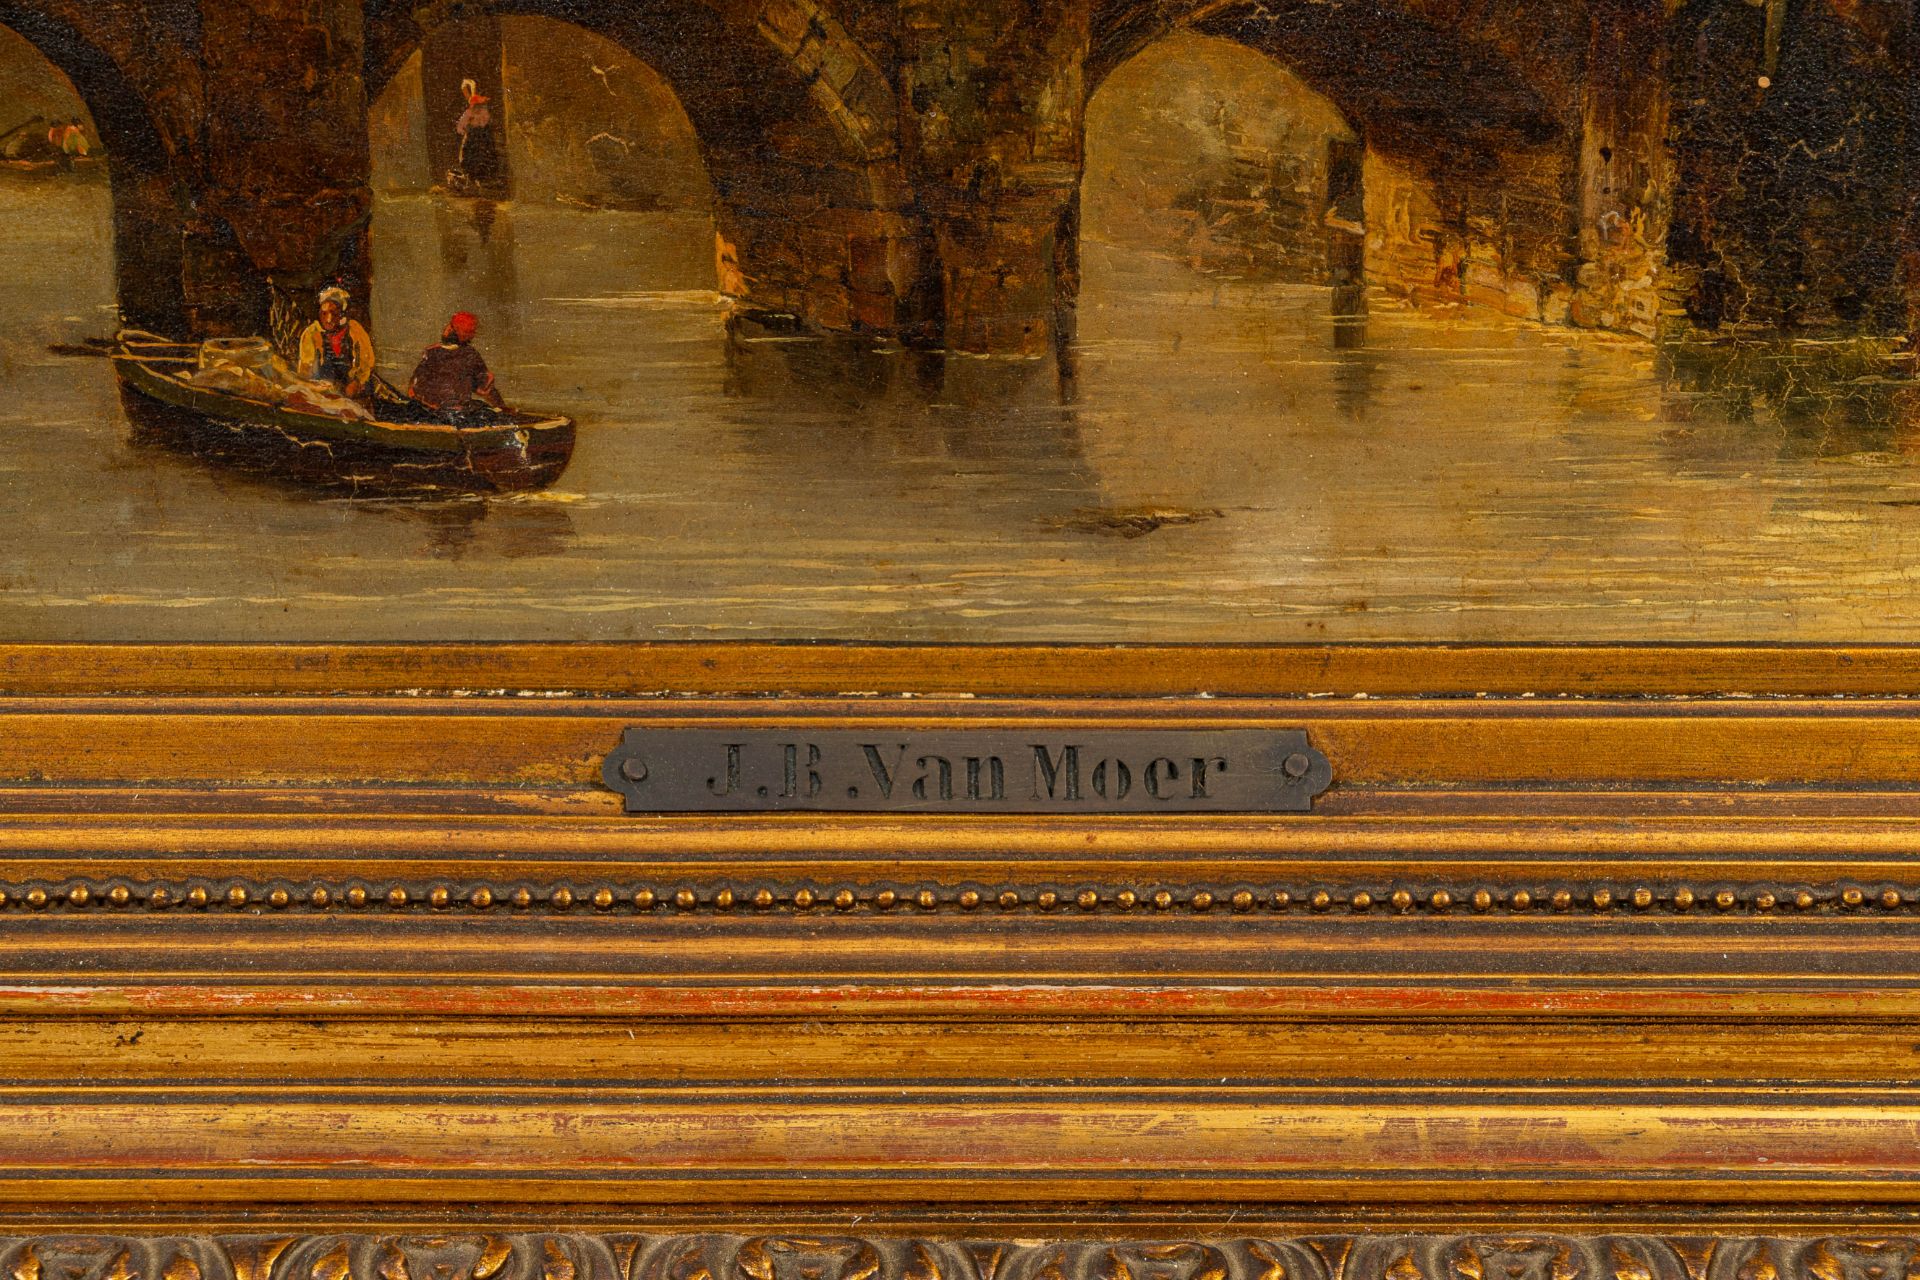 Belgian school, attributed to Jean Baptiste Van Moer (1819-1884): Animated Ghent city view - Image 5 of 6